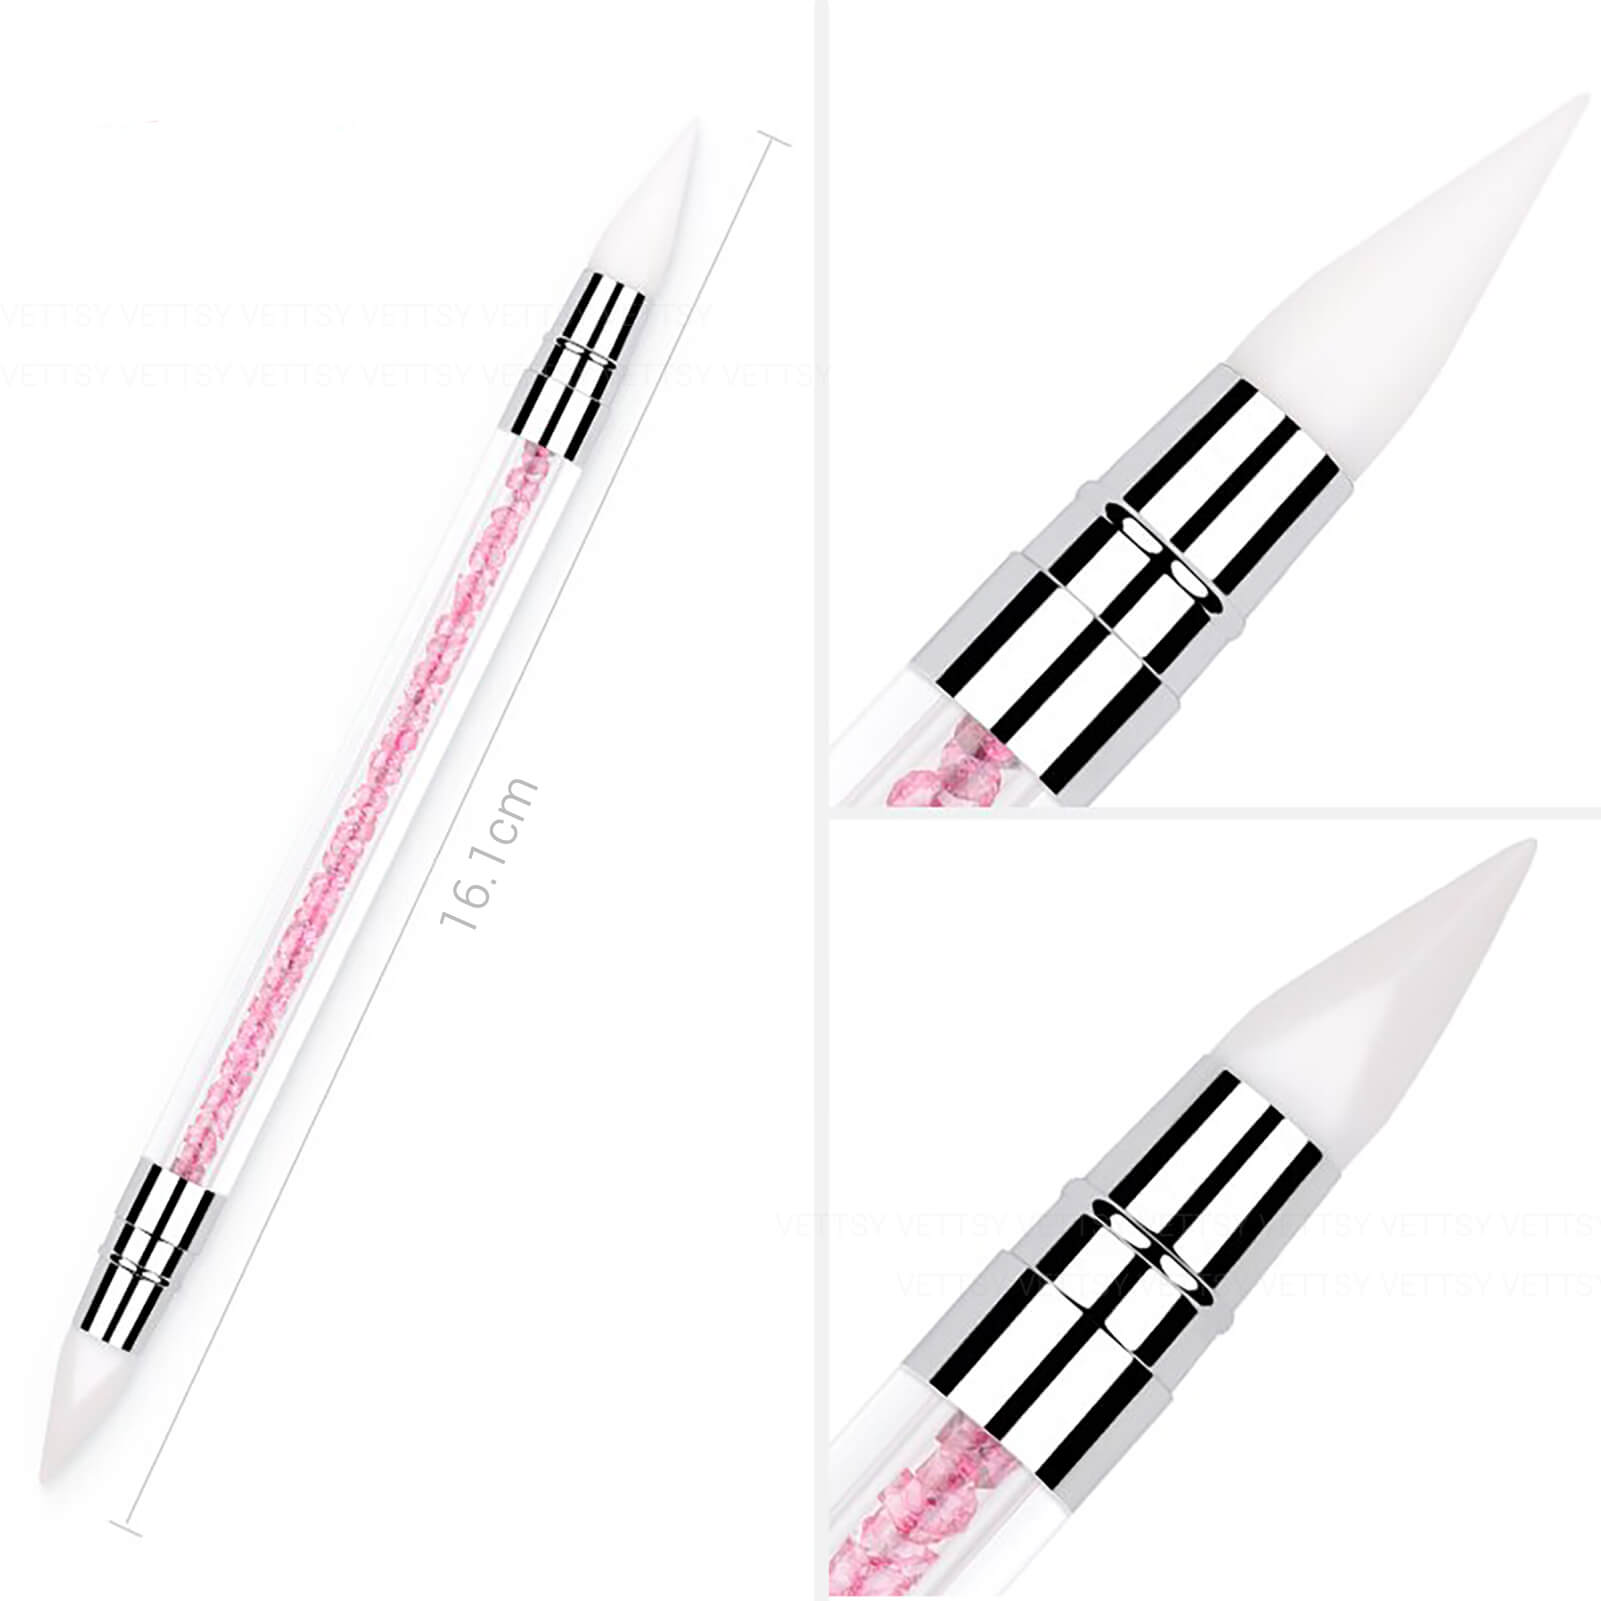 Vettsy Silicone Nail Art Pen Pink